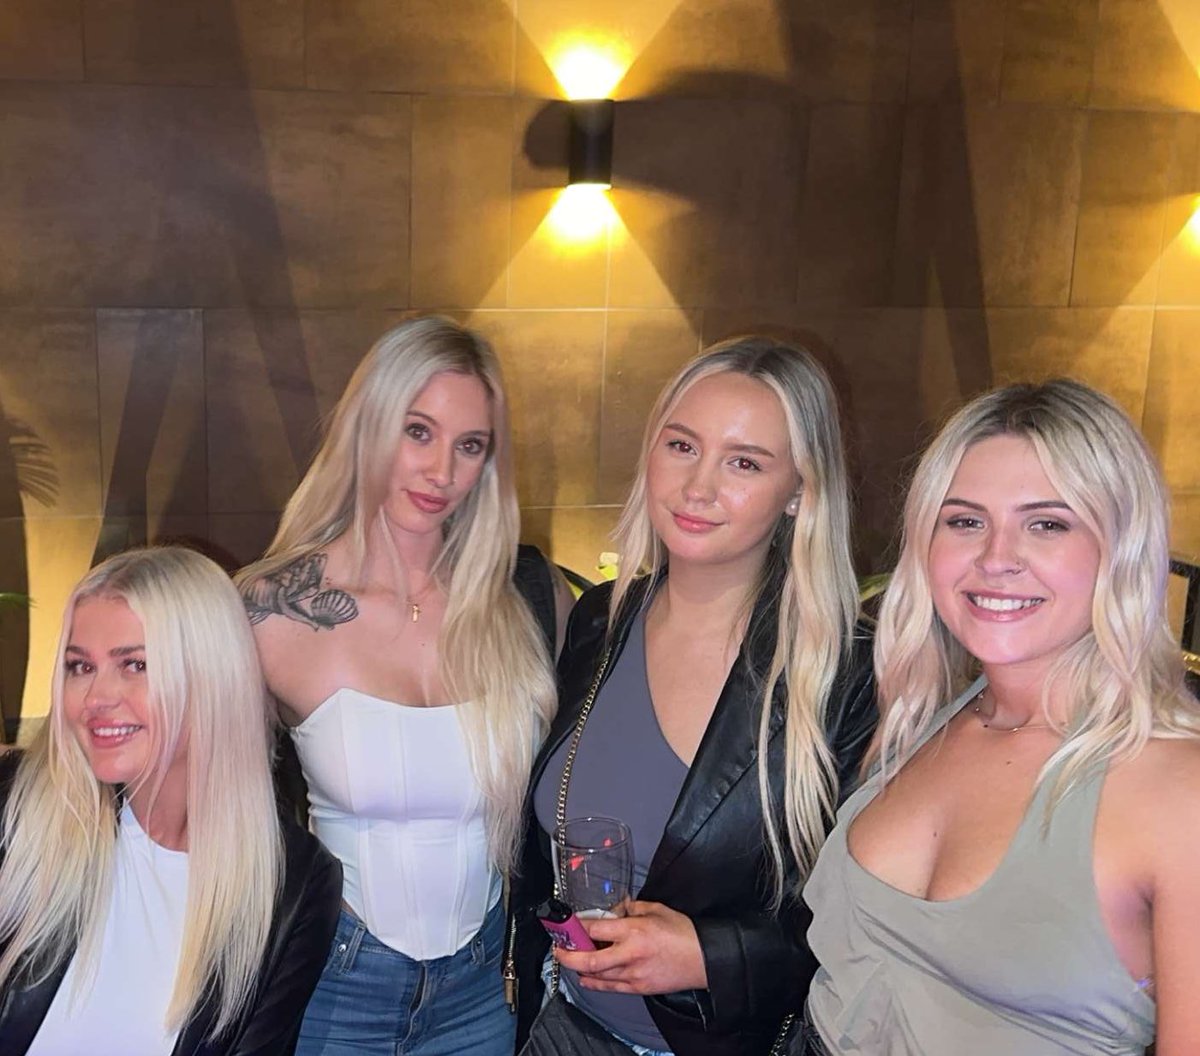 4 blondes walk into a bar…